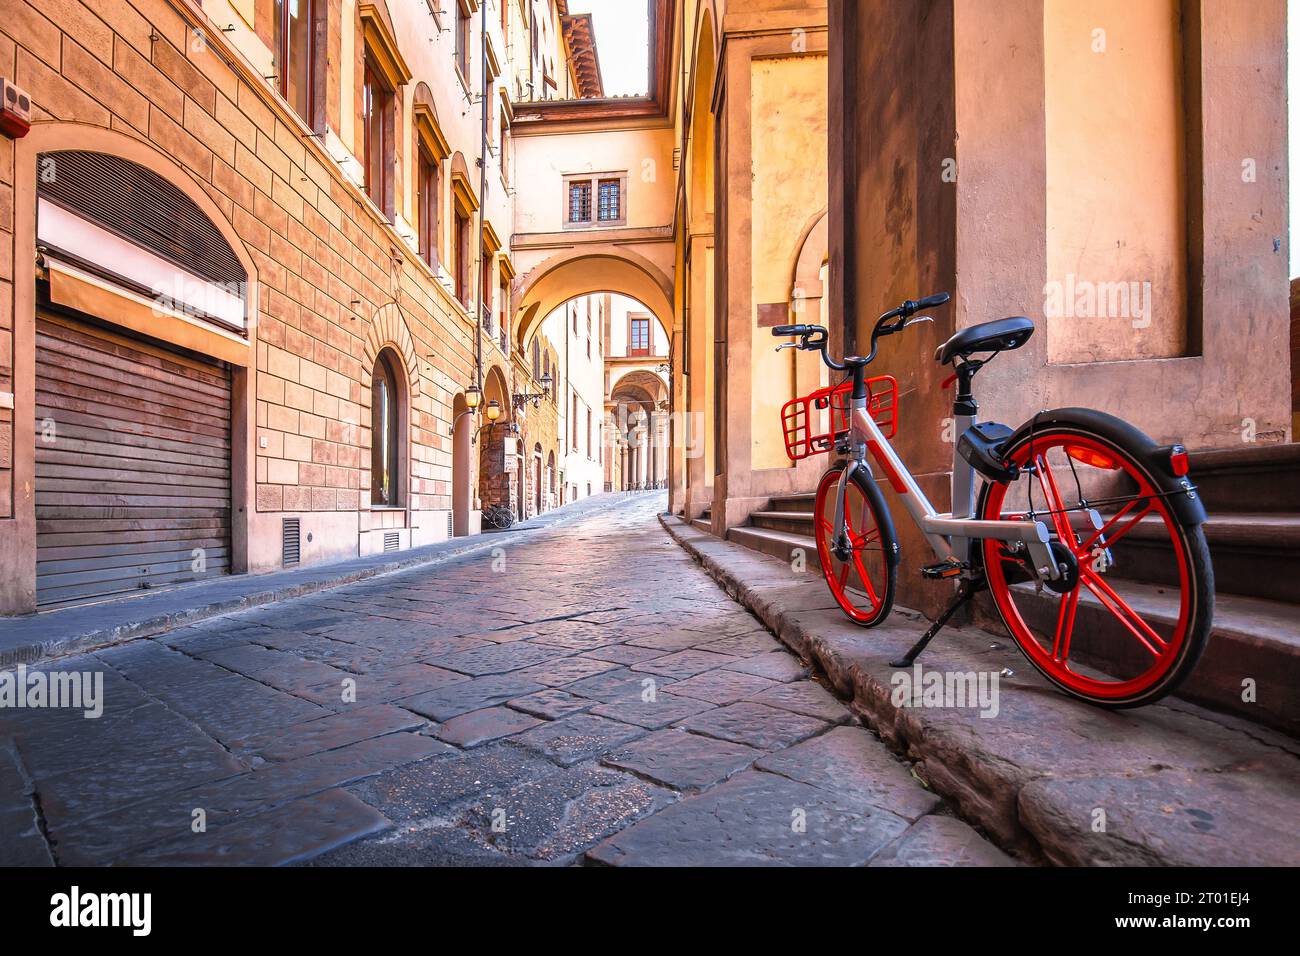 Arno river coastline stone street in Florence view, Tuscany region of Italy Stock Photo